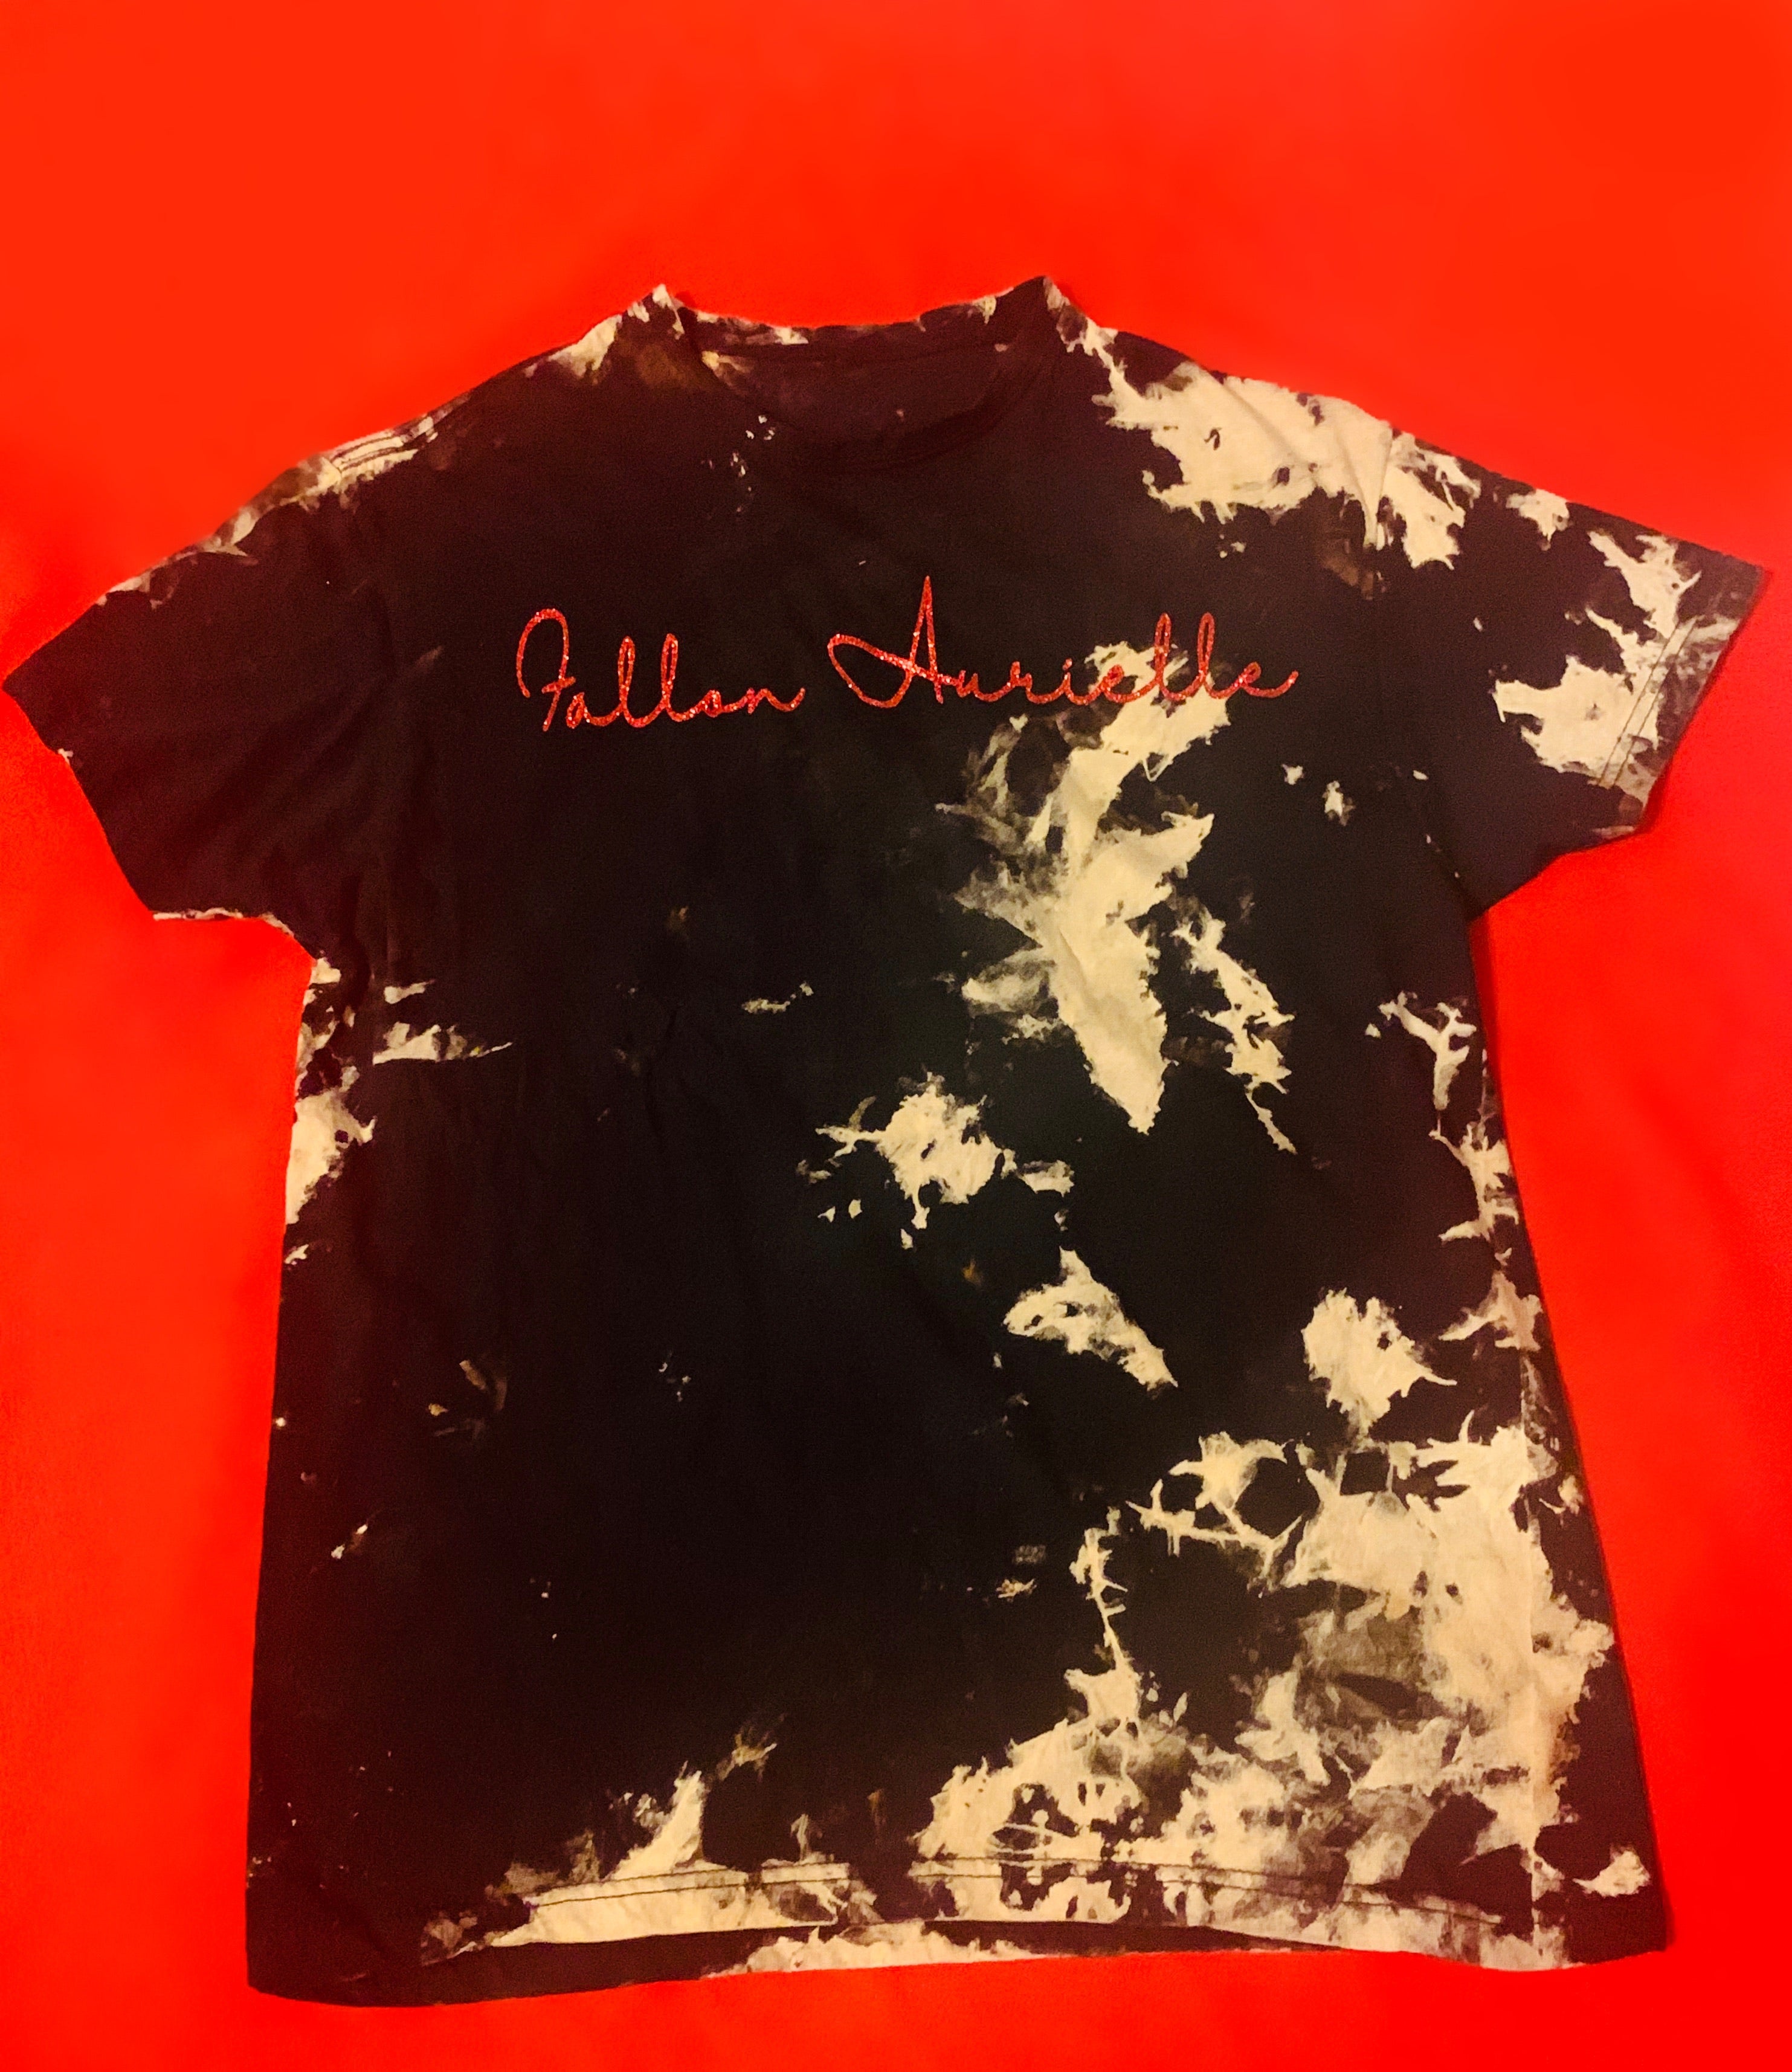 Fallon Aurielle Unisex Signature Acid Wash T-Shirt (Black, Red & Tan)